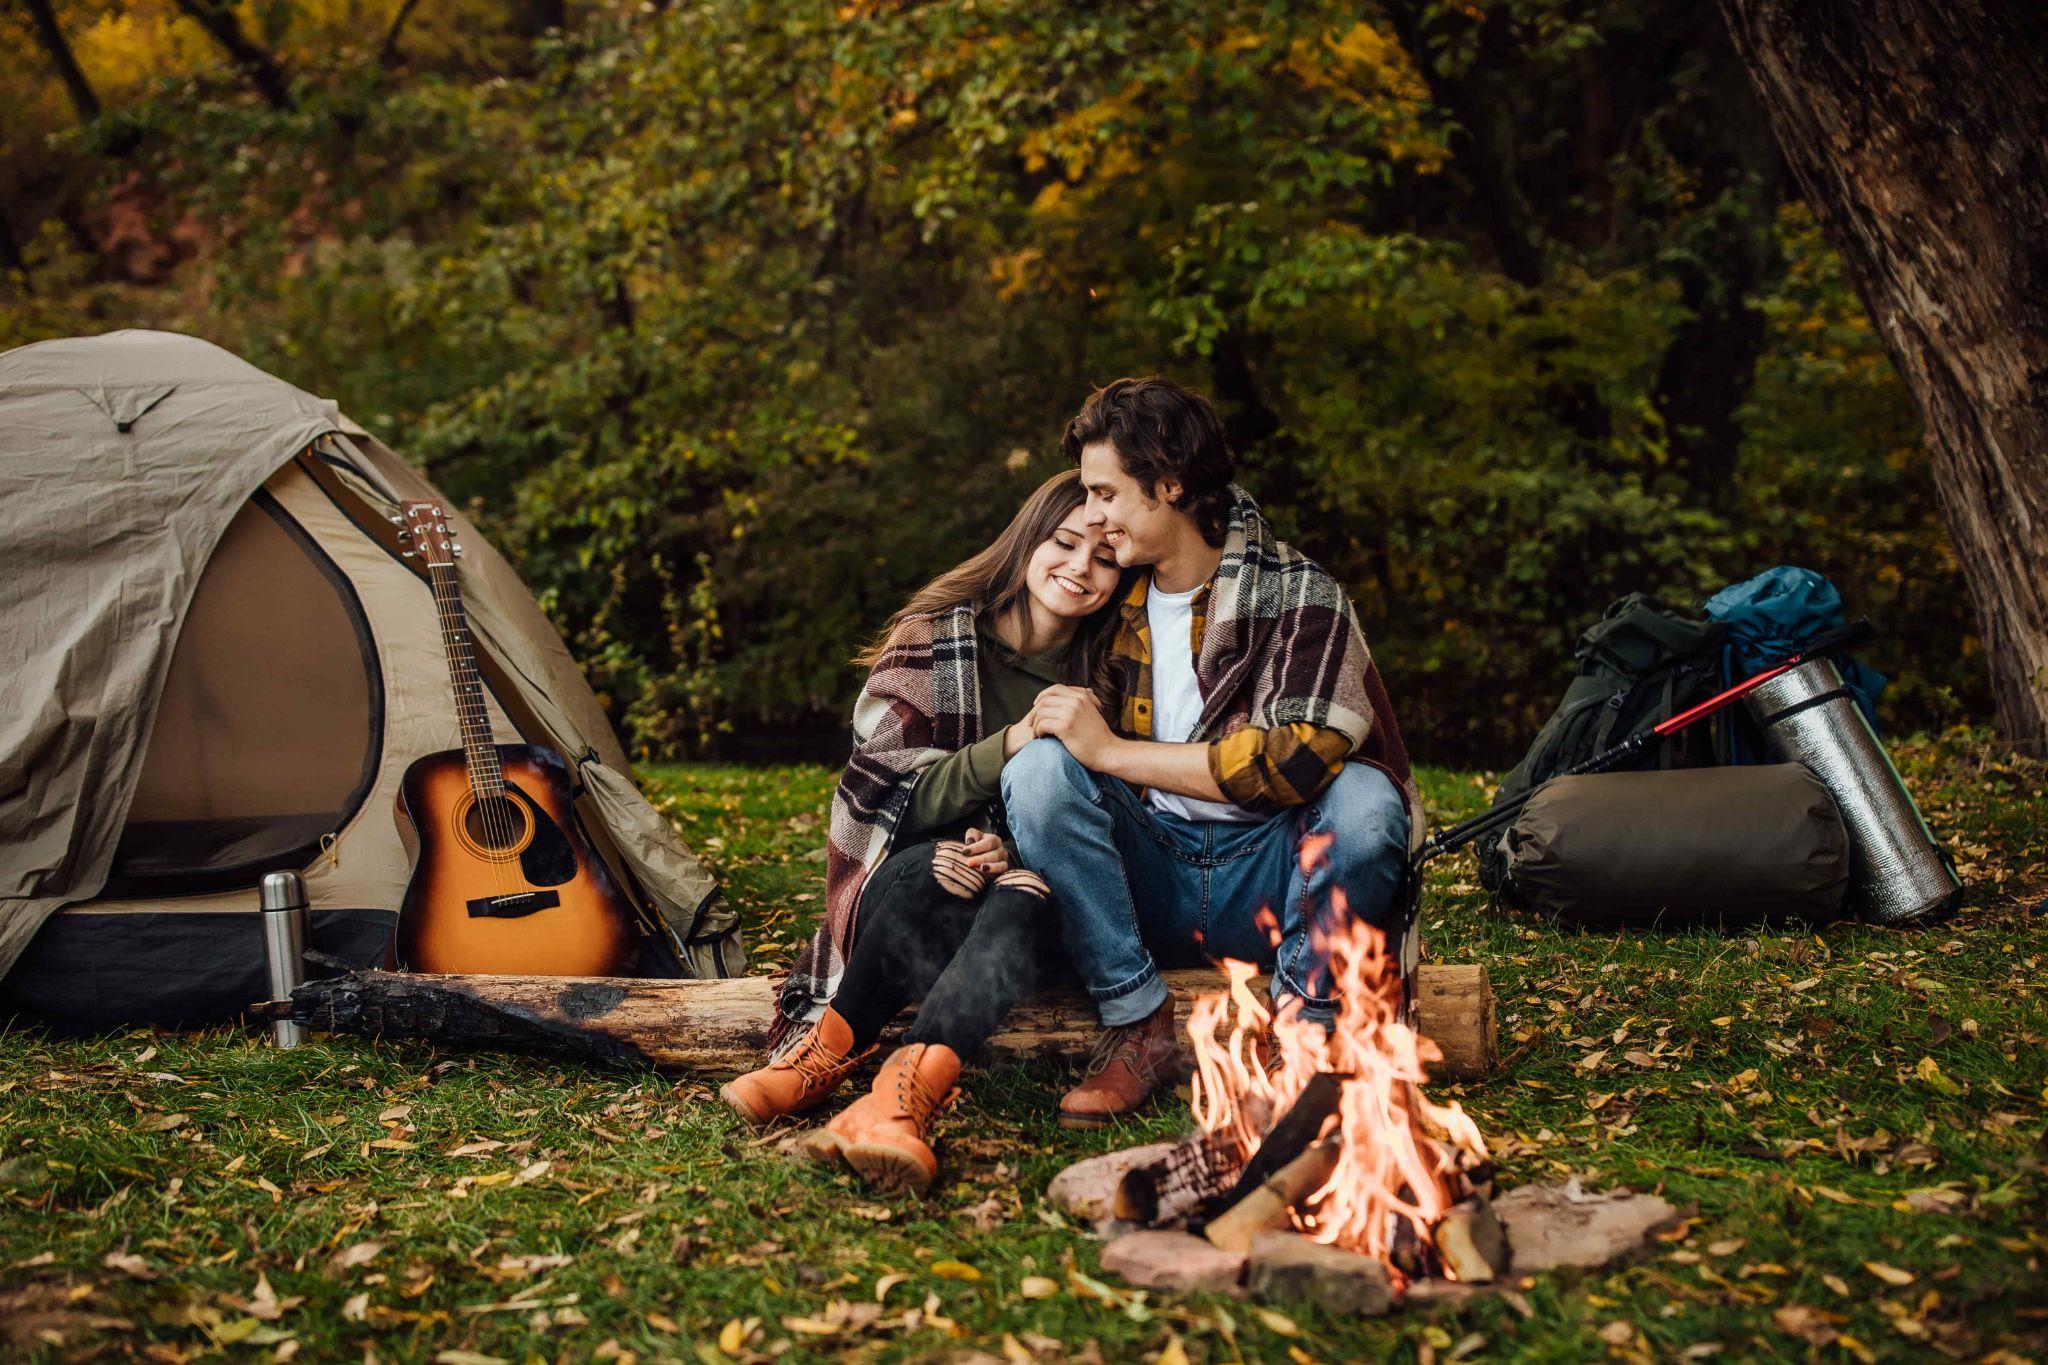 I love camping. Отдых на природе с друзьями. Кемпинг люди. Романтика в палатке на природе. Пара туристов.